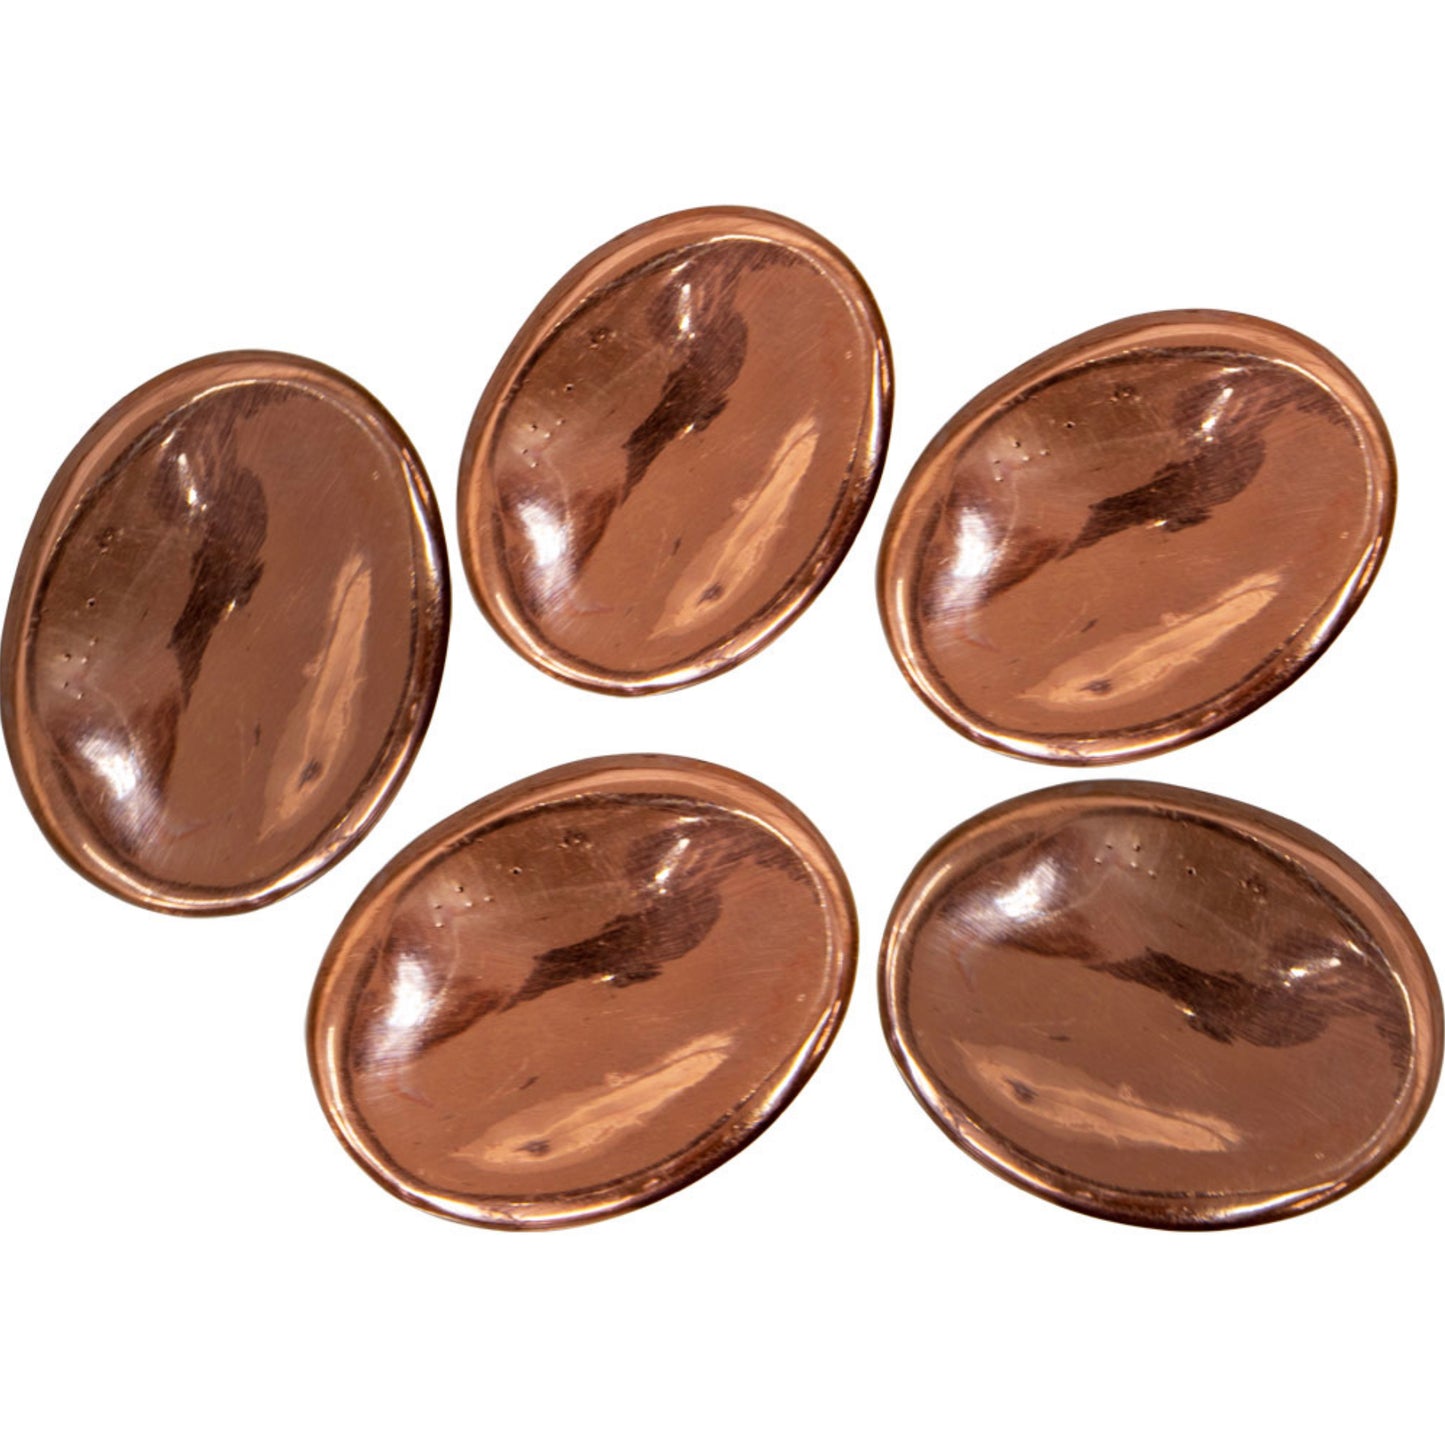 Pure Copper Worry Stones